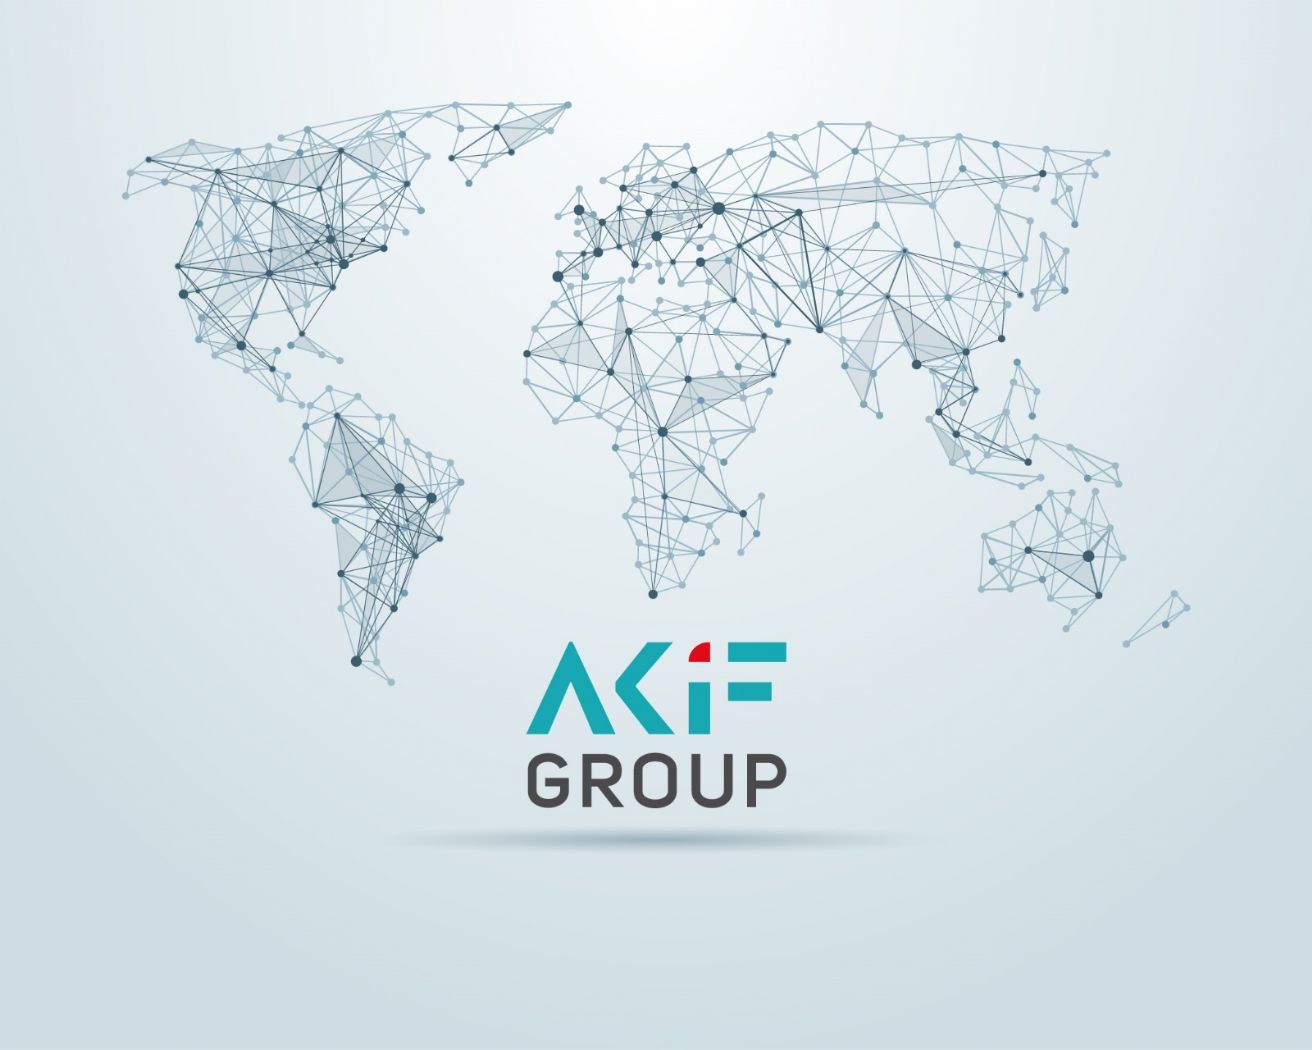 Akif Group